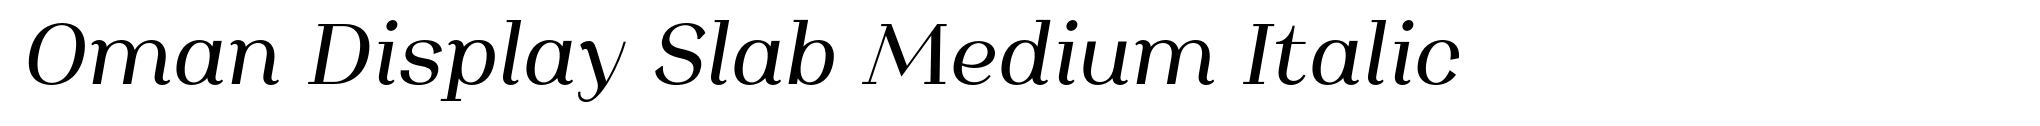 Oman Display Slab Medium Italic image